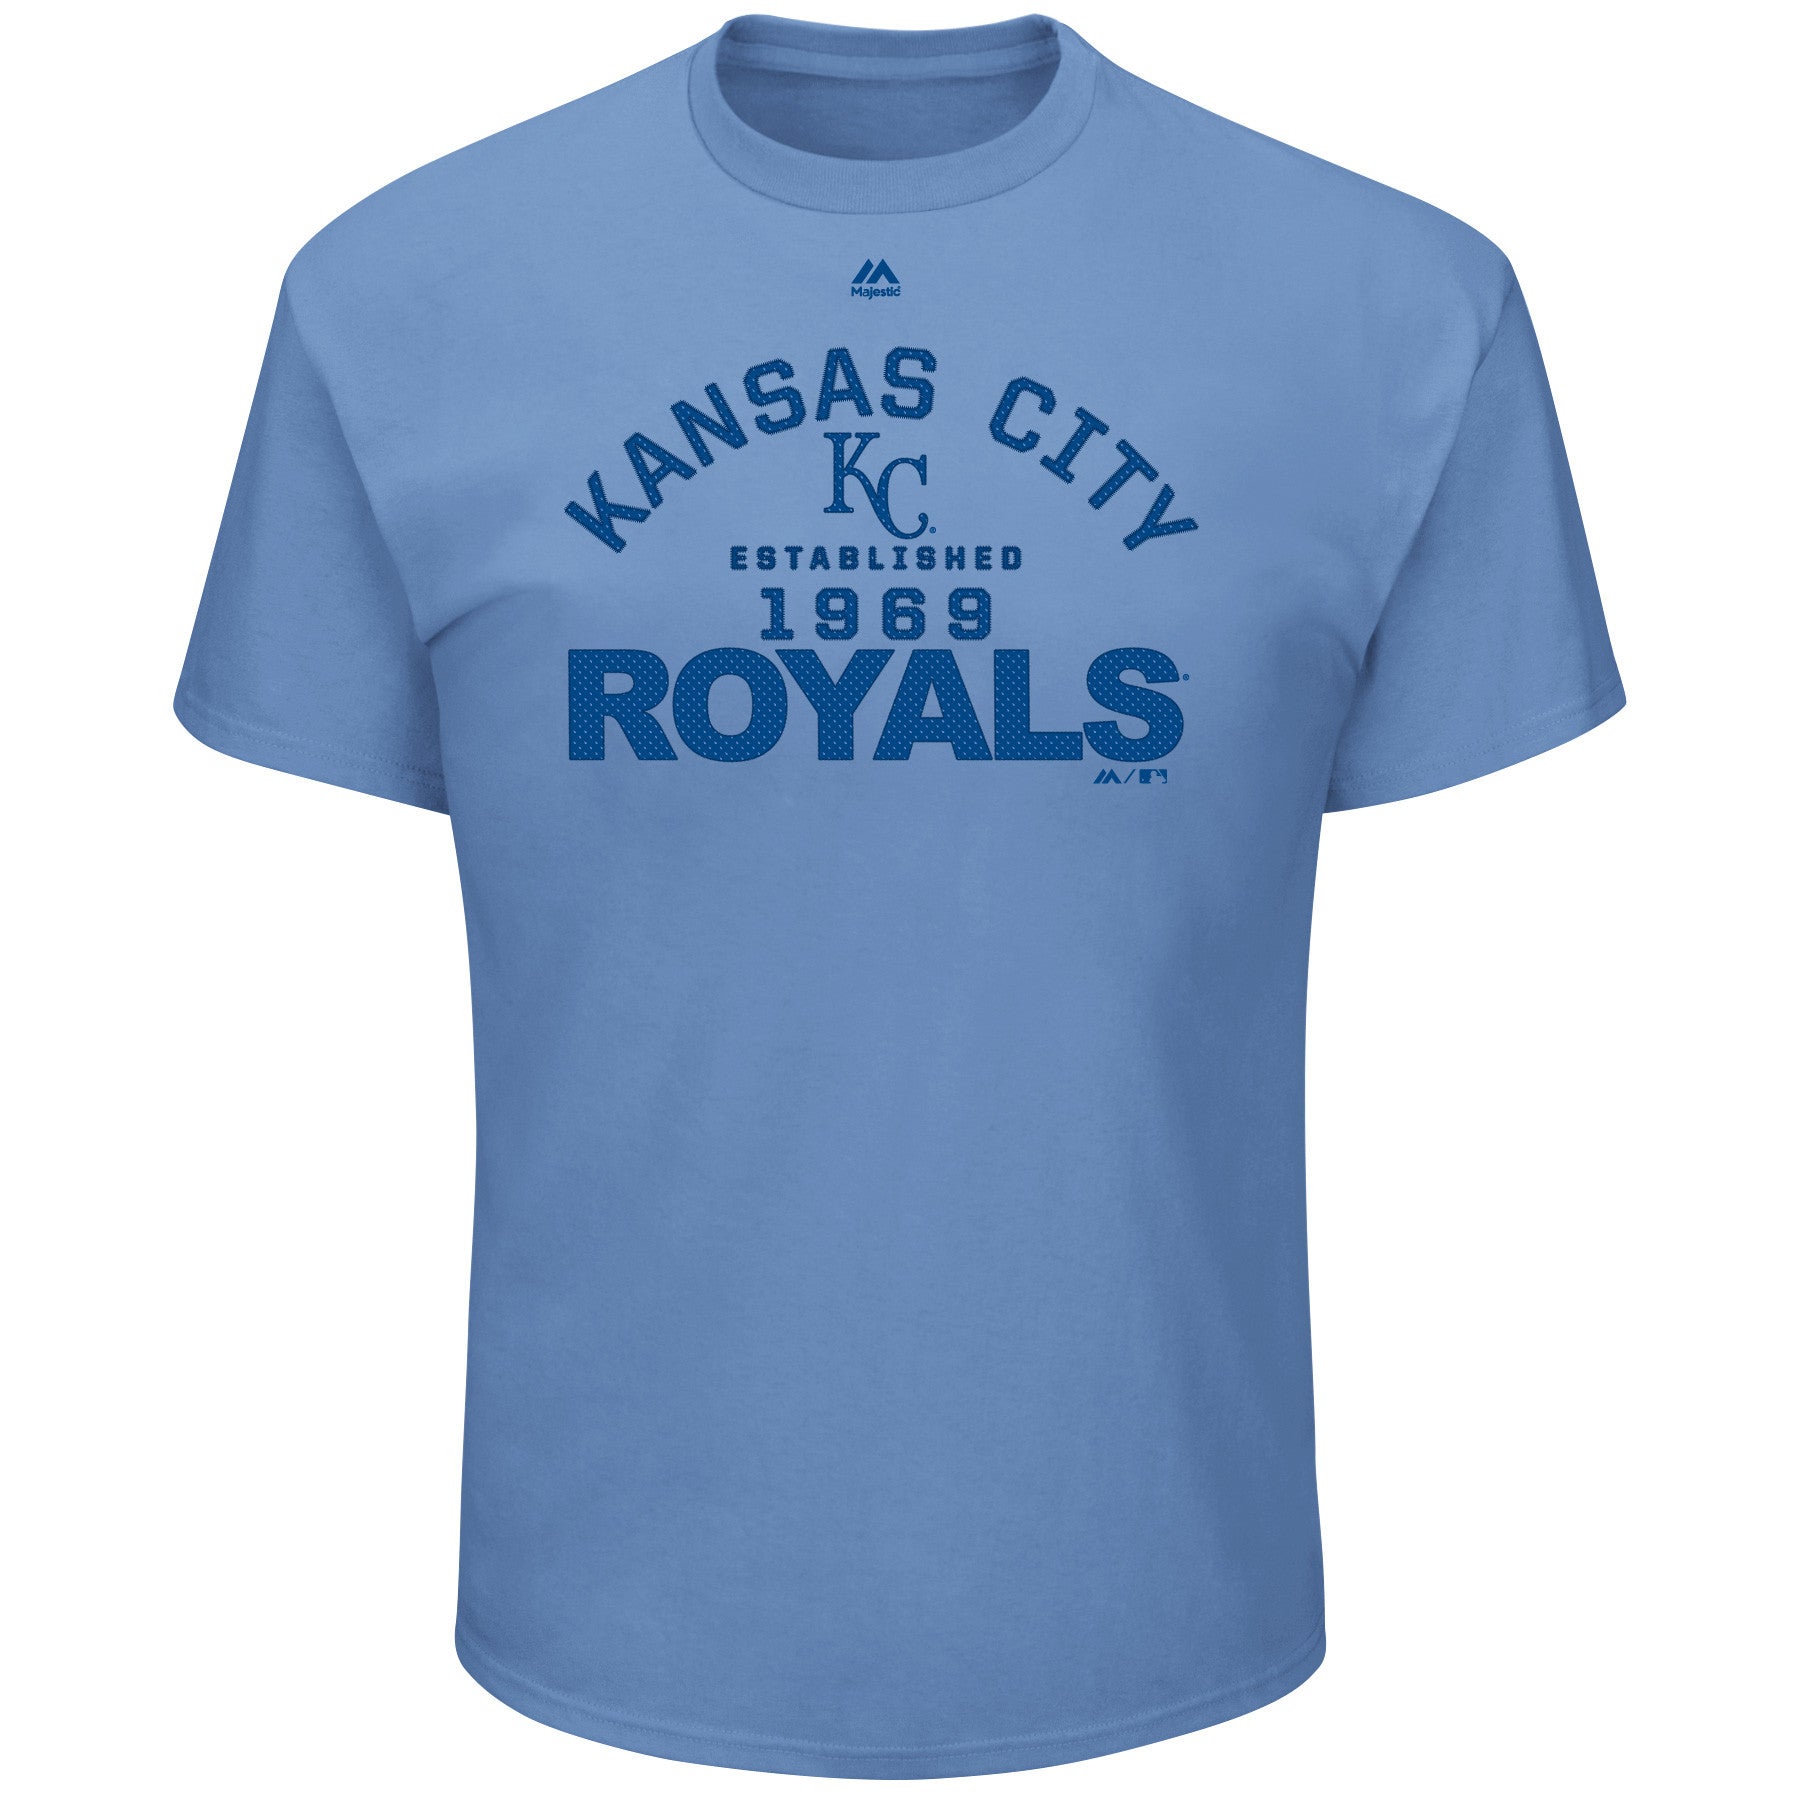 Kansas City Royals True Champion T-Shirt by Majestic